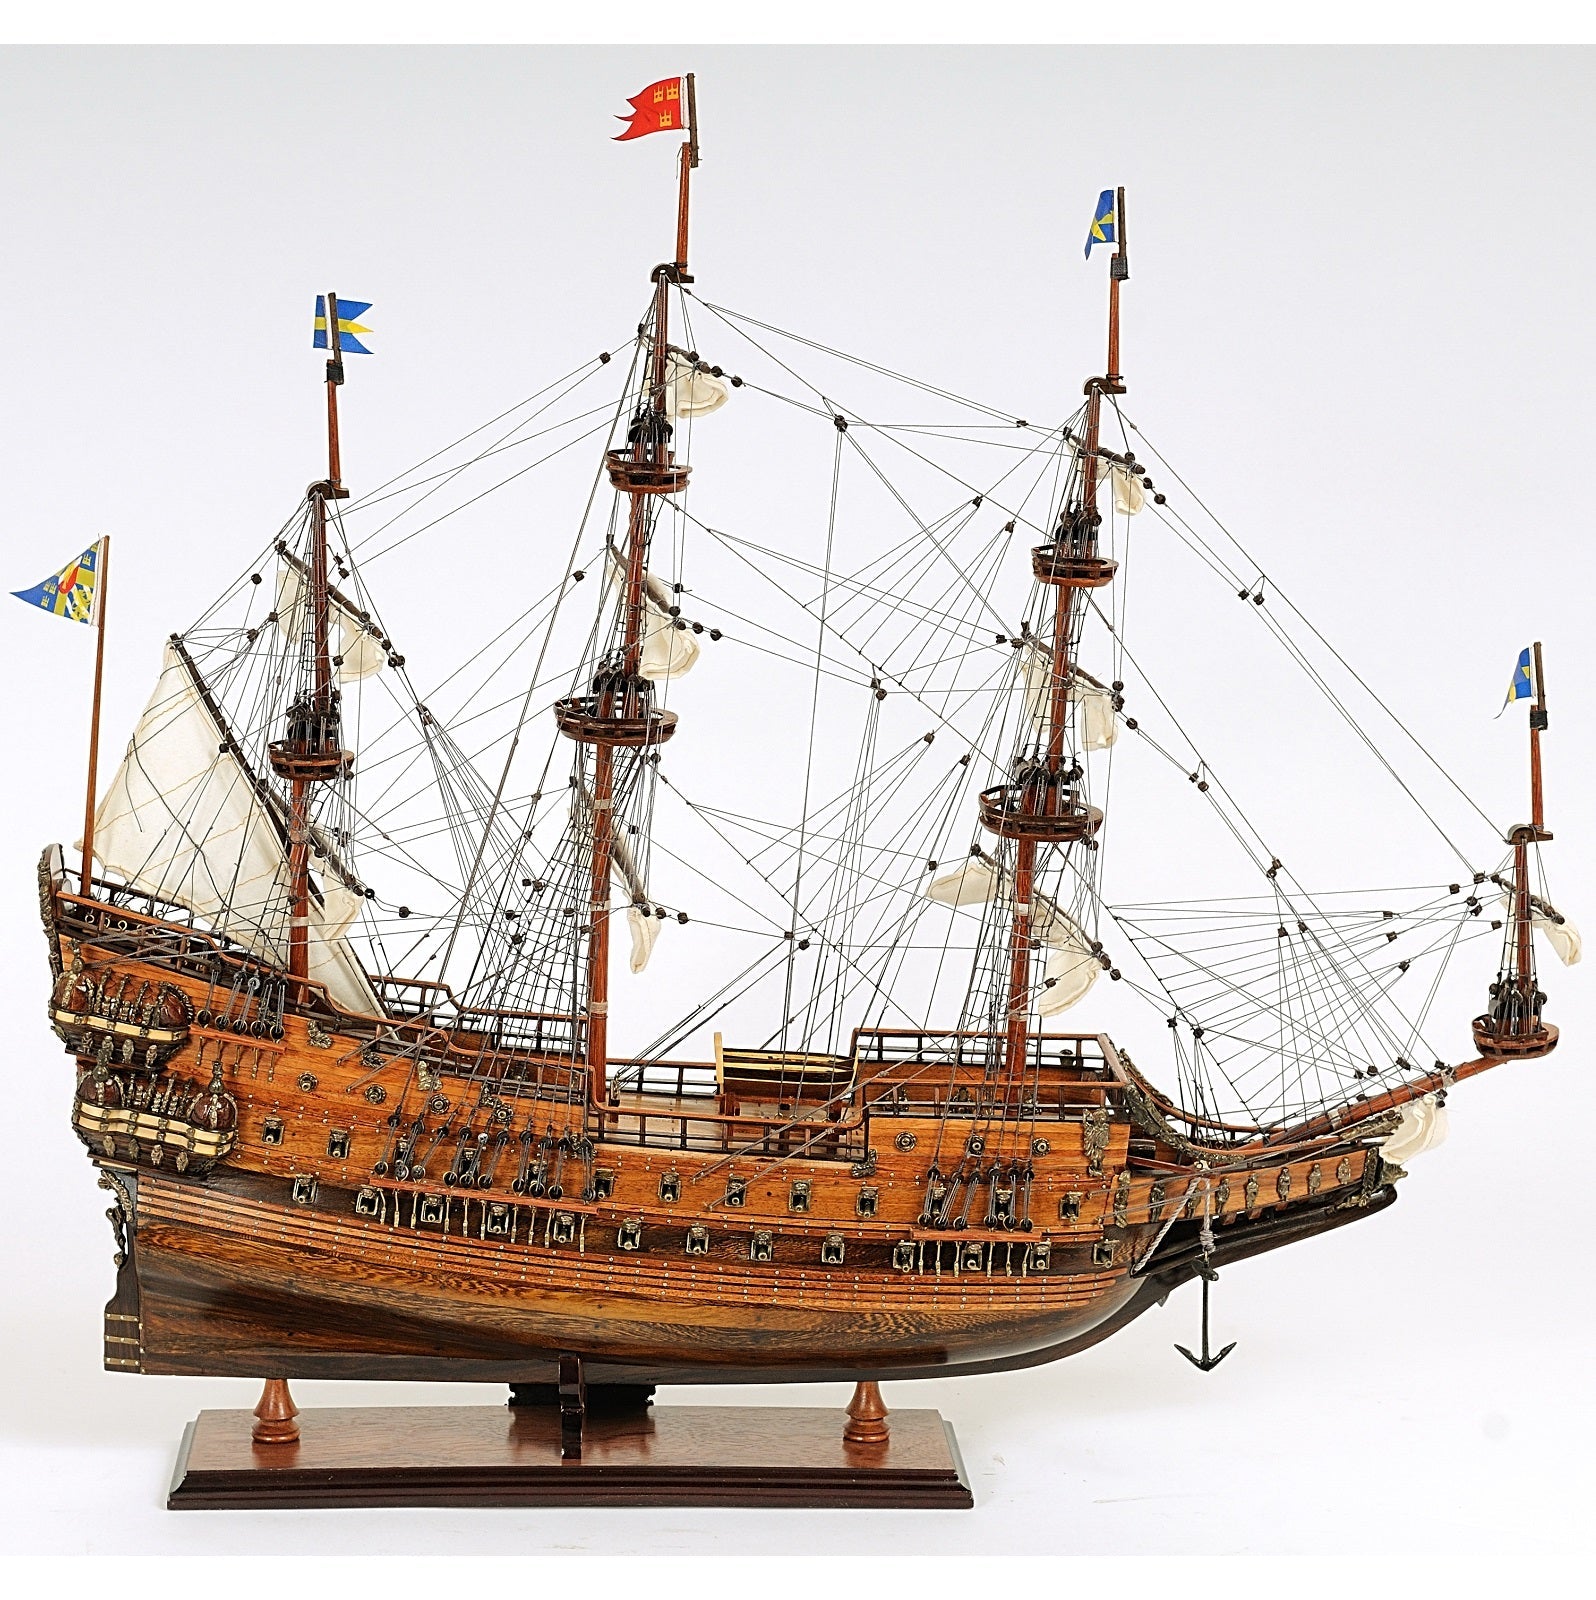 Old Modern Handicrafts Fully Assembled ^Vasa Warship